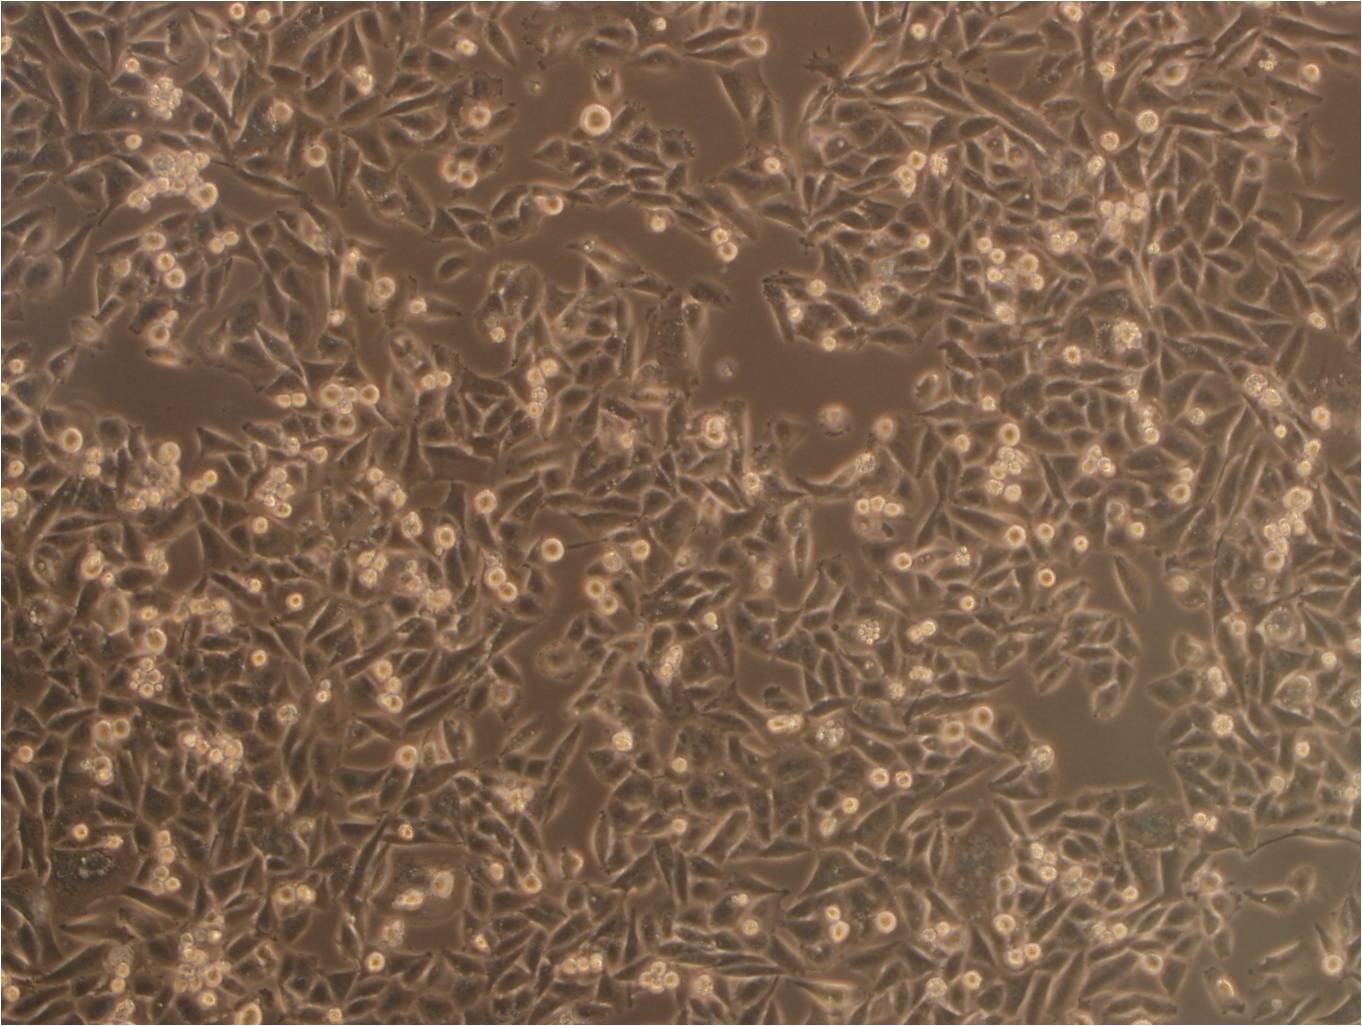 JB6 [Mouse] epithelioid cells小鼠表皮细胞系